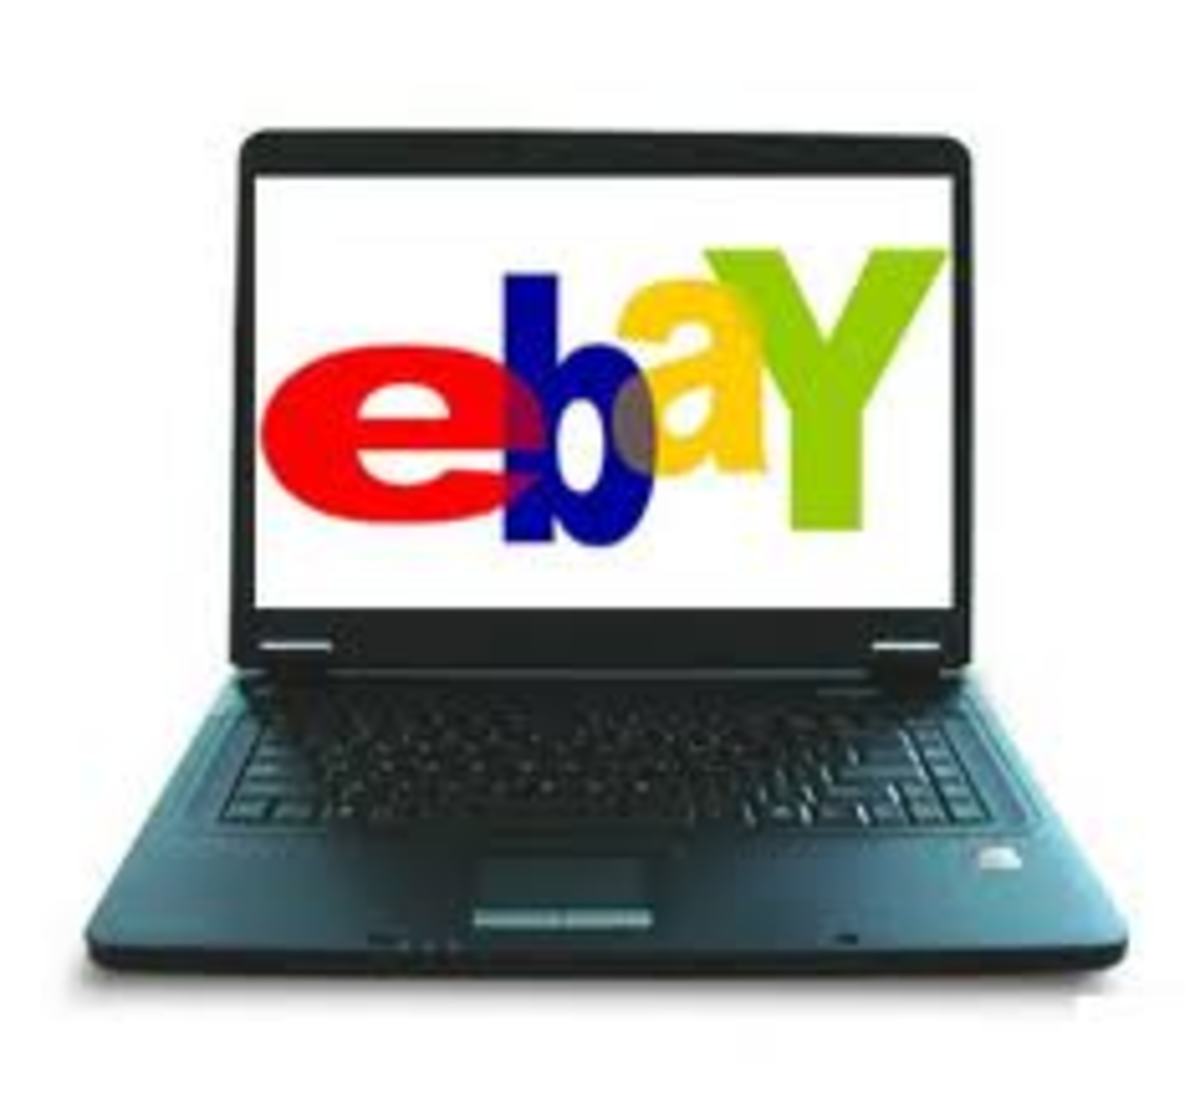 Buying through ebay